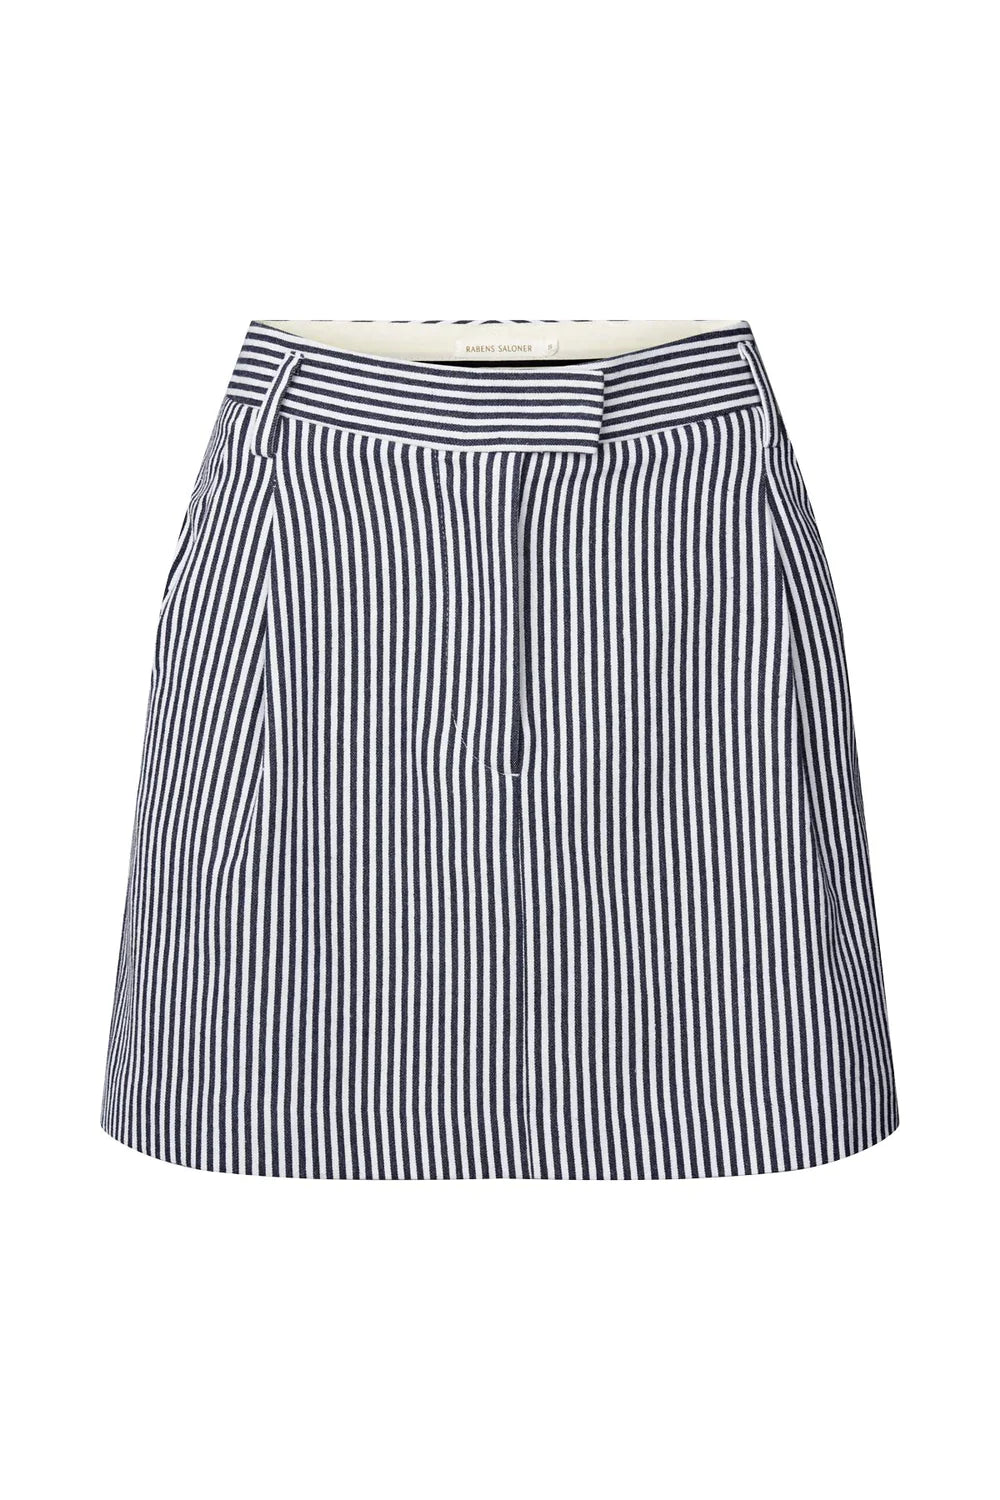 Hollie skirt in blue stripe